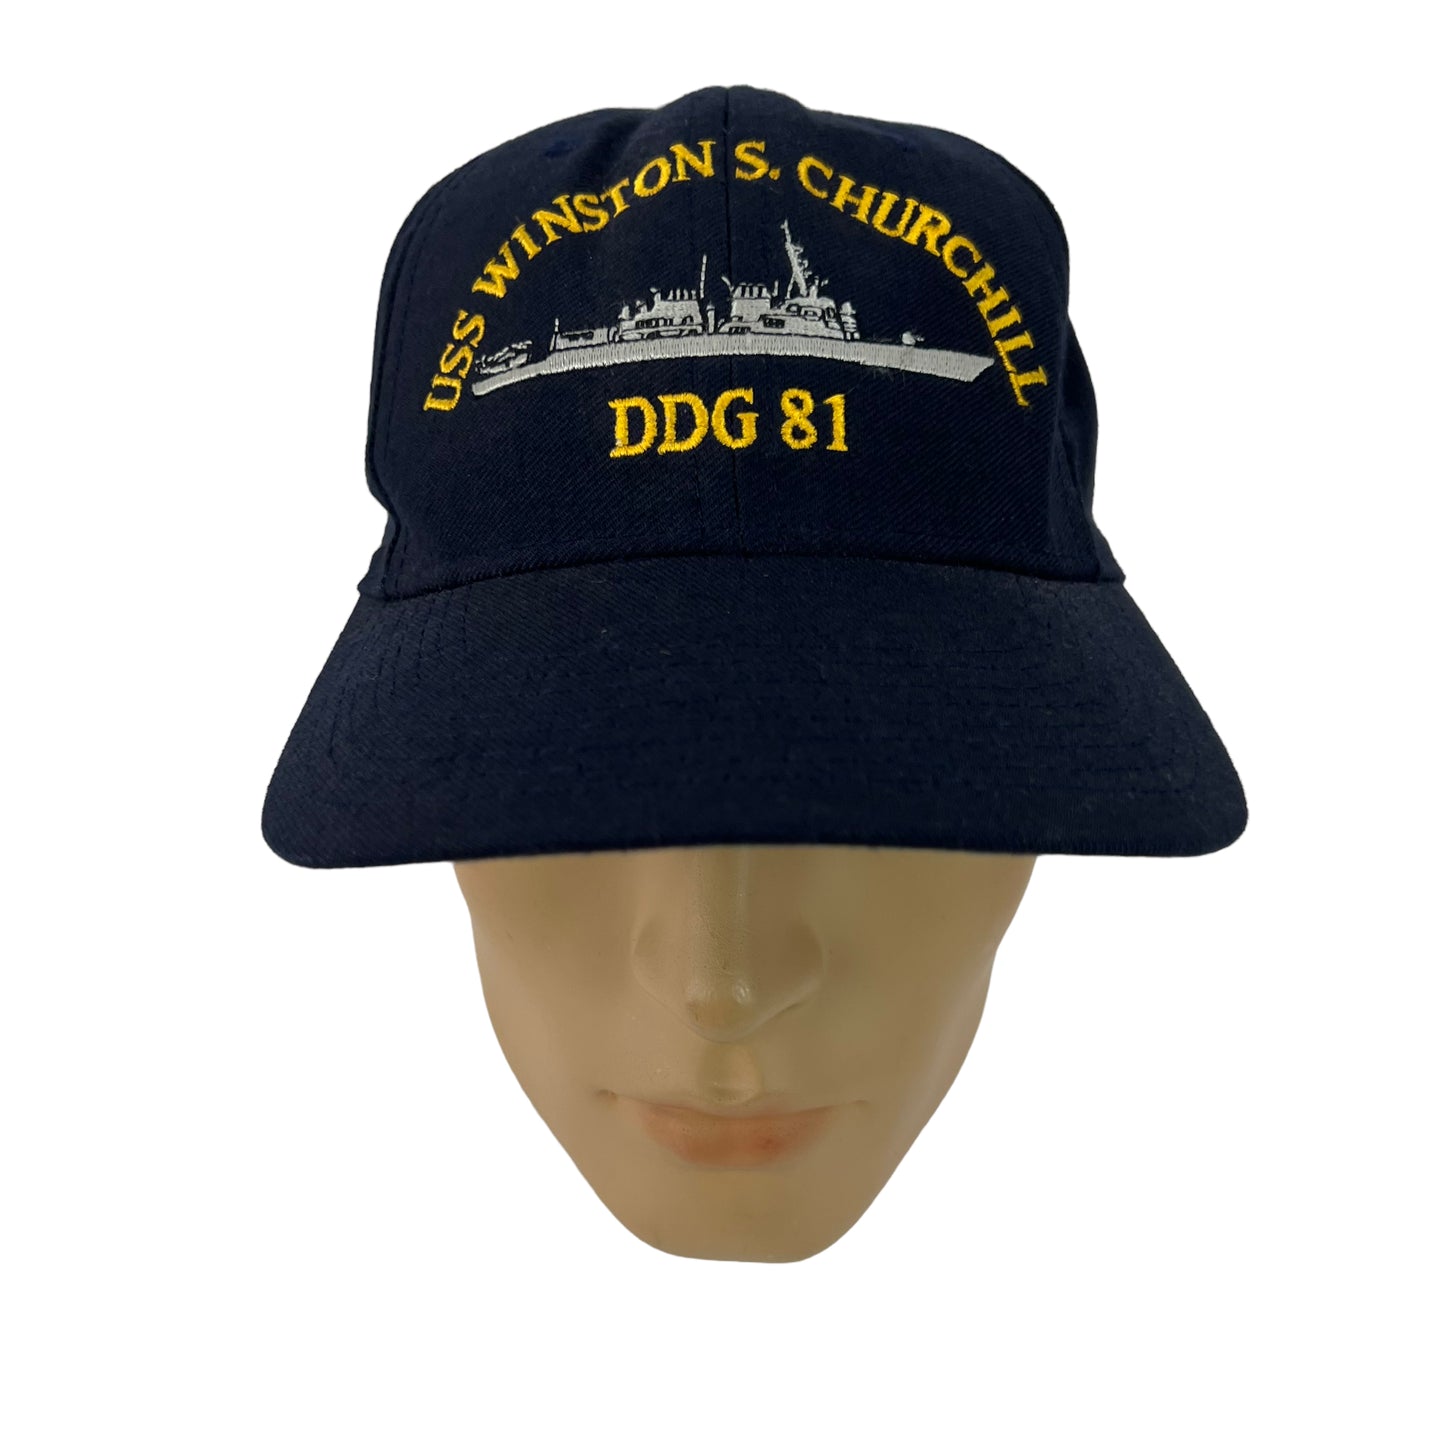 USS Winston S Church Hill DDG 81 Baseball Cap - Made in the USA